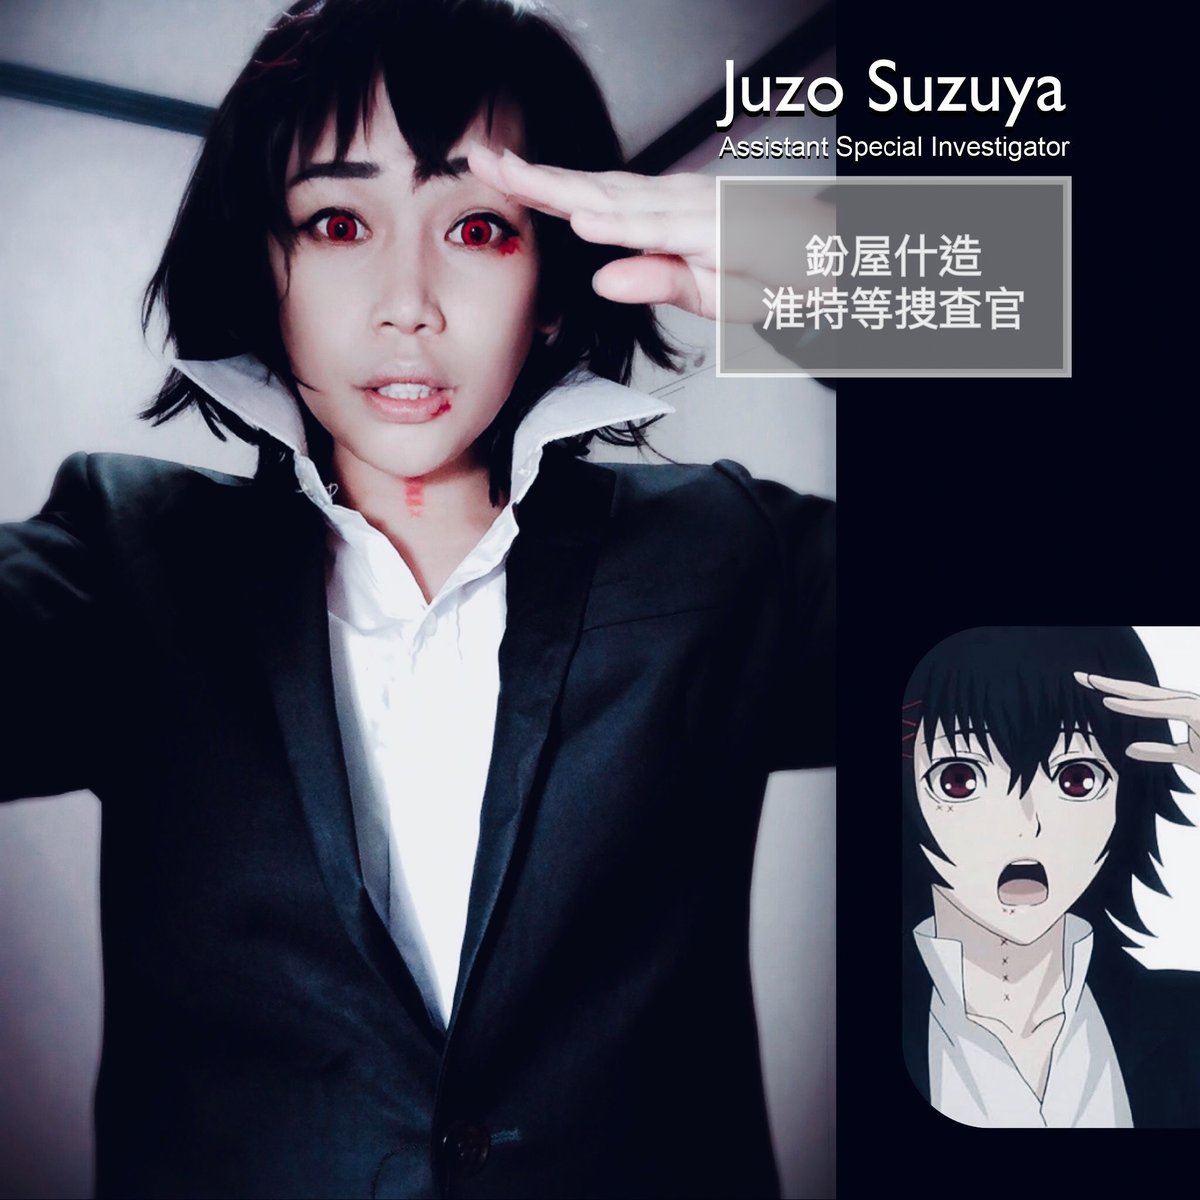 Scy Sze Juuzou Suzuya 鈴屋 什造 Suzuya Juzō Is A Special Class Ghoul Investigator In The Past He Went By The Name Rei Suzuya 鈴屋 玲 Suzuya Rei He Was